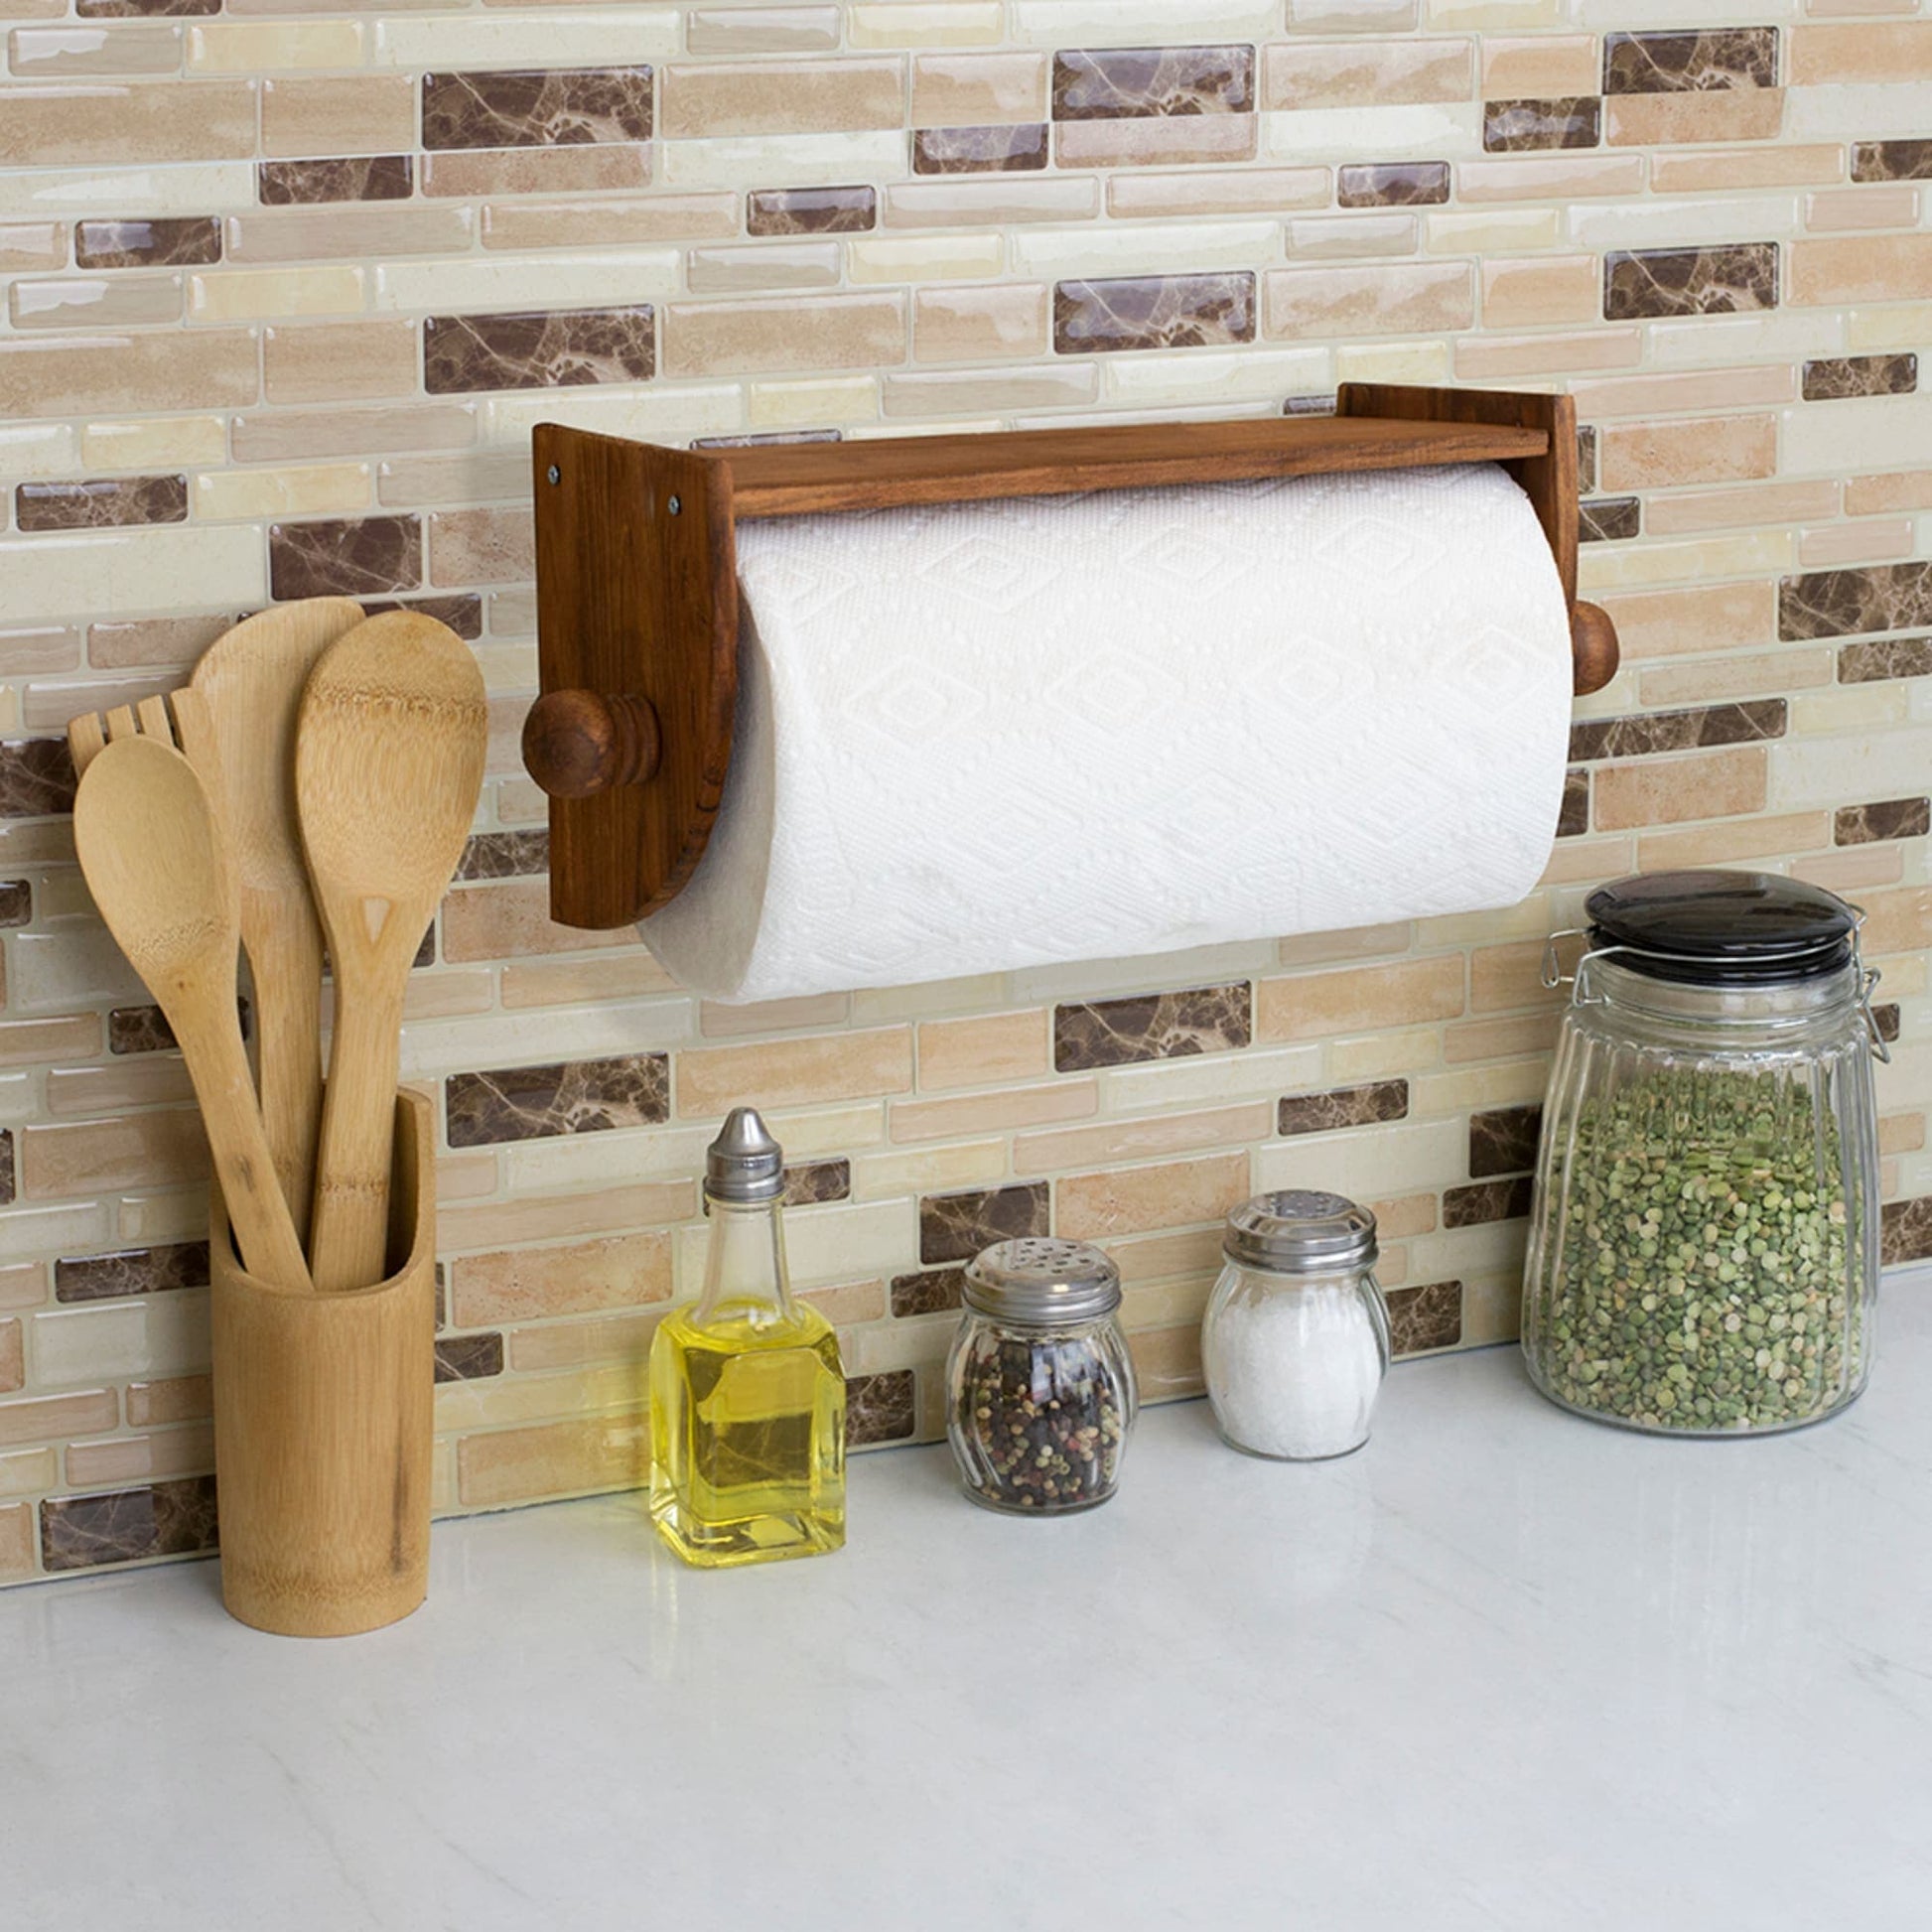 Home Basics Black Wall Mounted Paper Towel Holder 